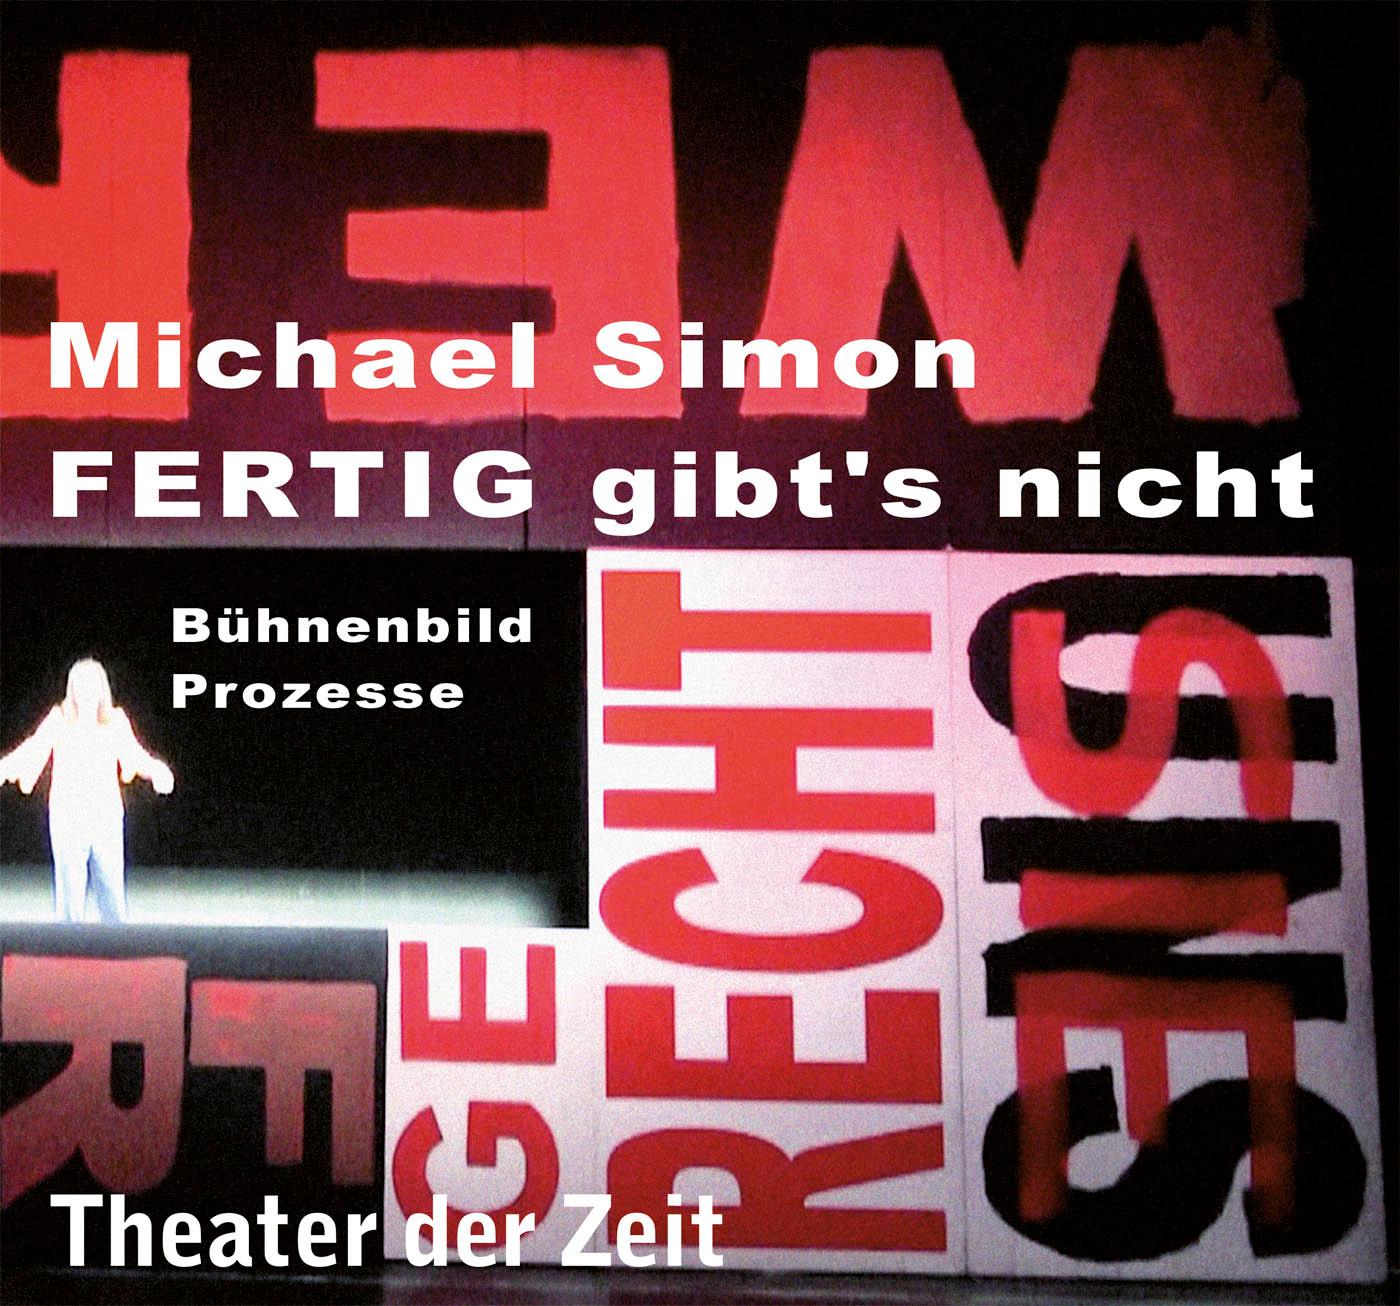 "Michael Simon – FERTIG gibt’s nicht"